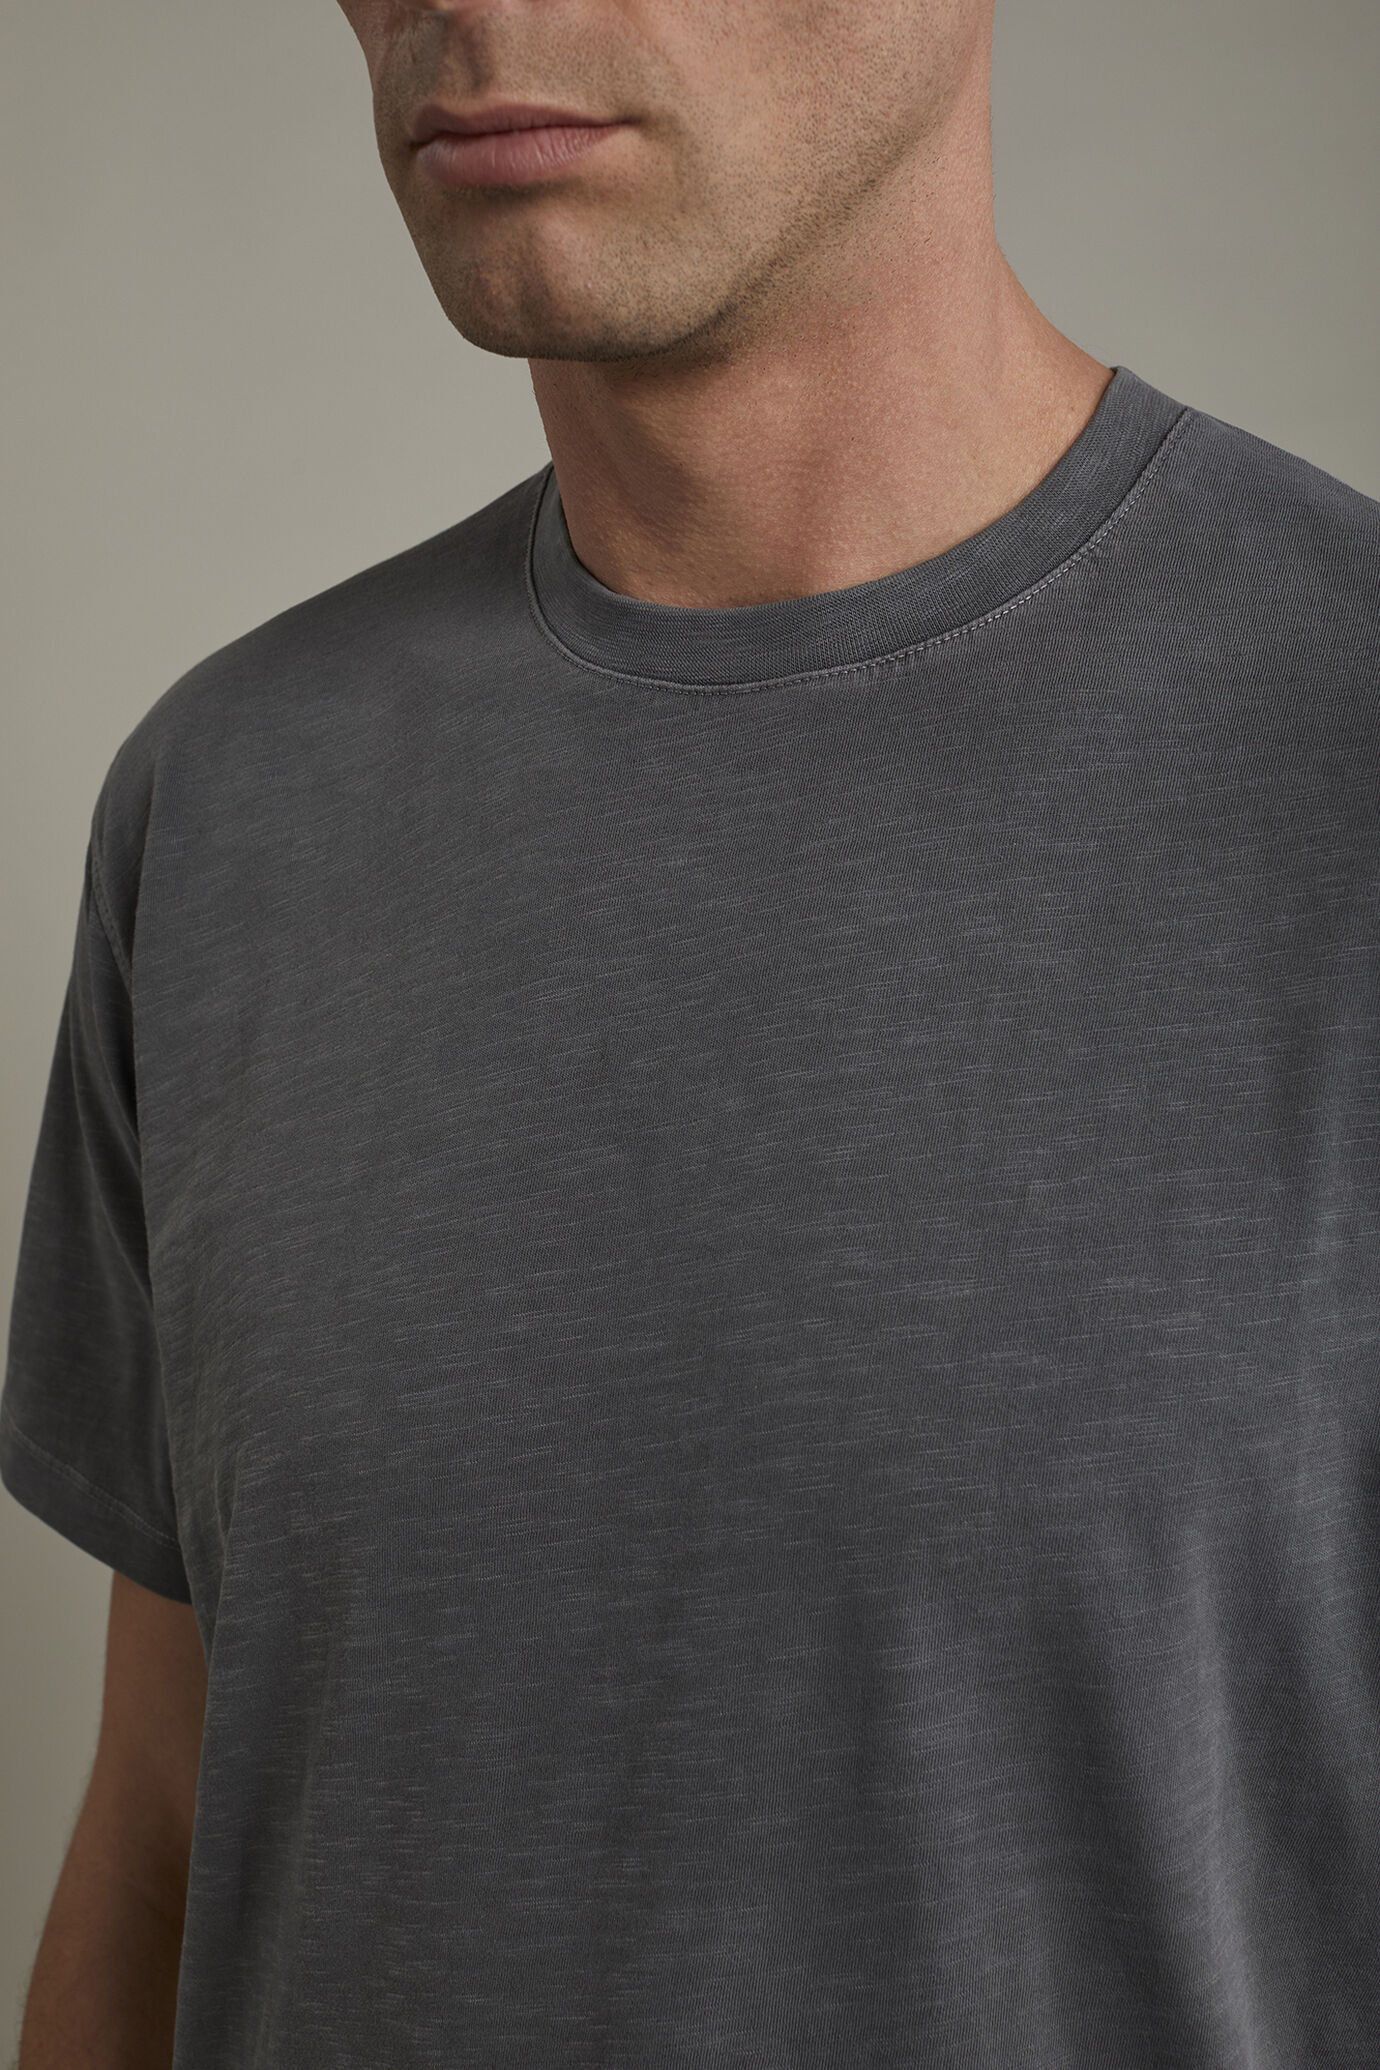 Men’s round neck t-shirt 100% cotton flamed effect regular fit image number 3